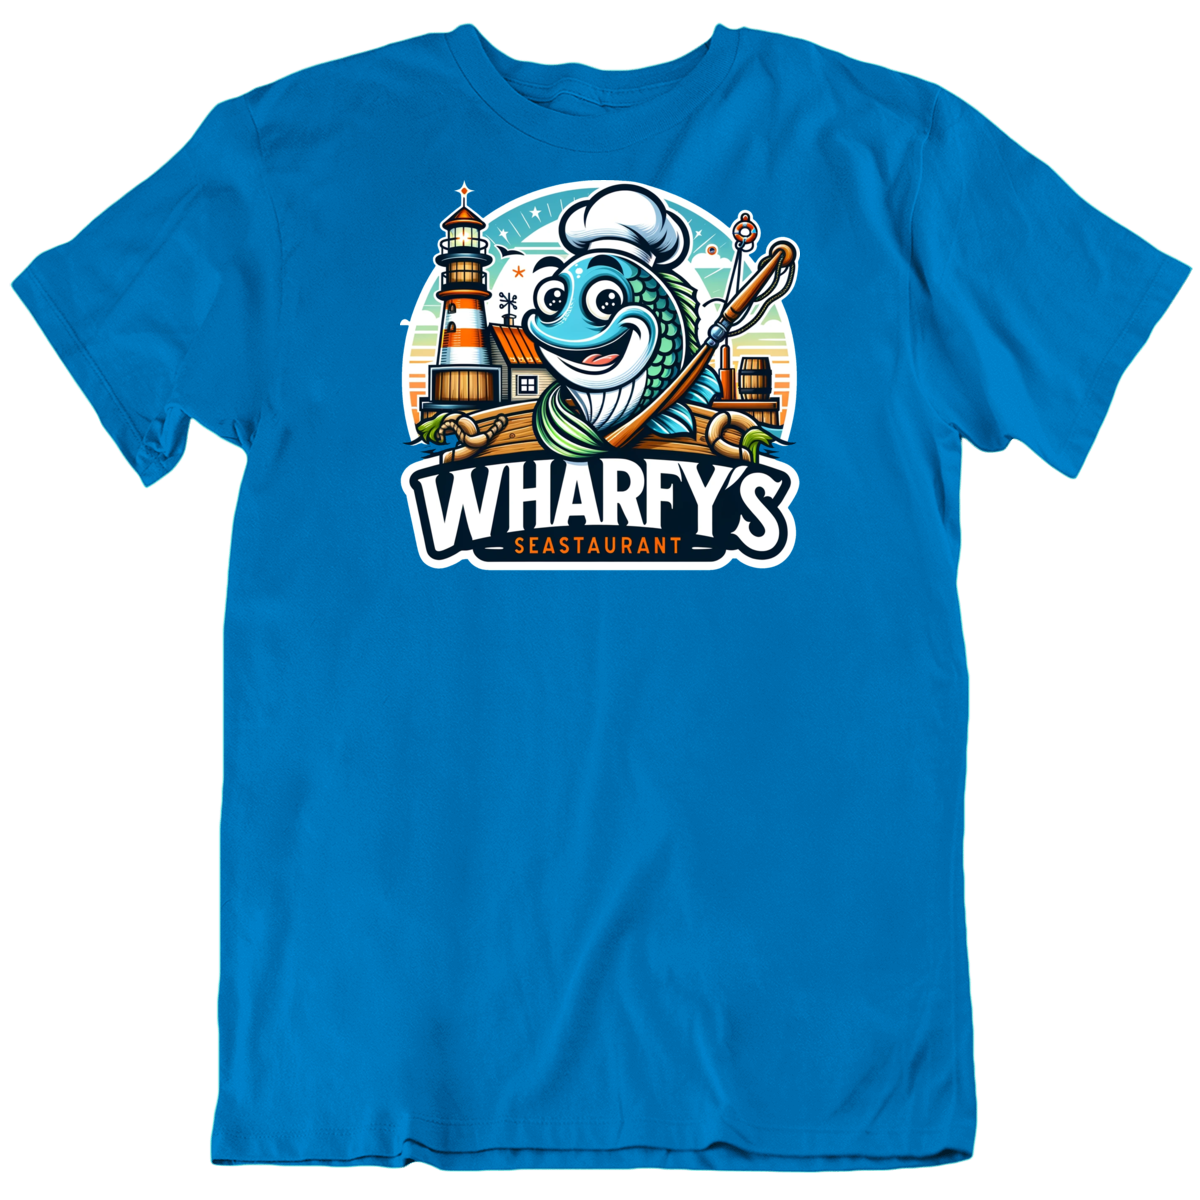 Wharfy's Seastaurant Seafood Restaurant Food Funny T Shirt